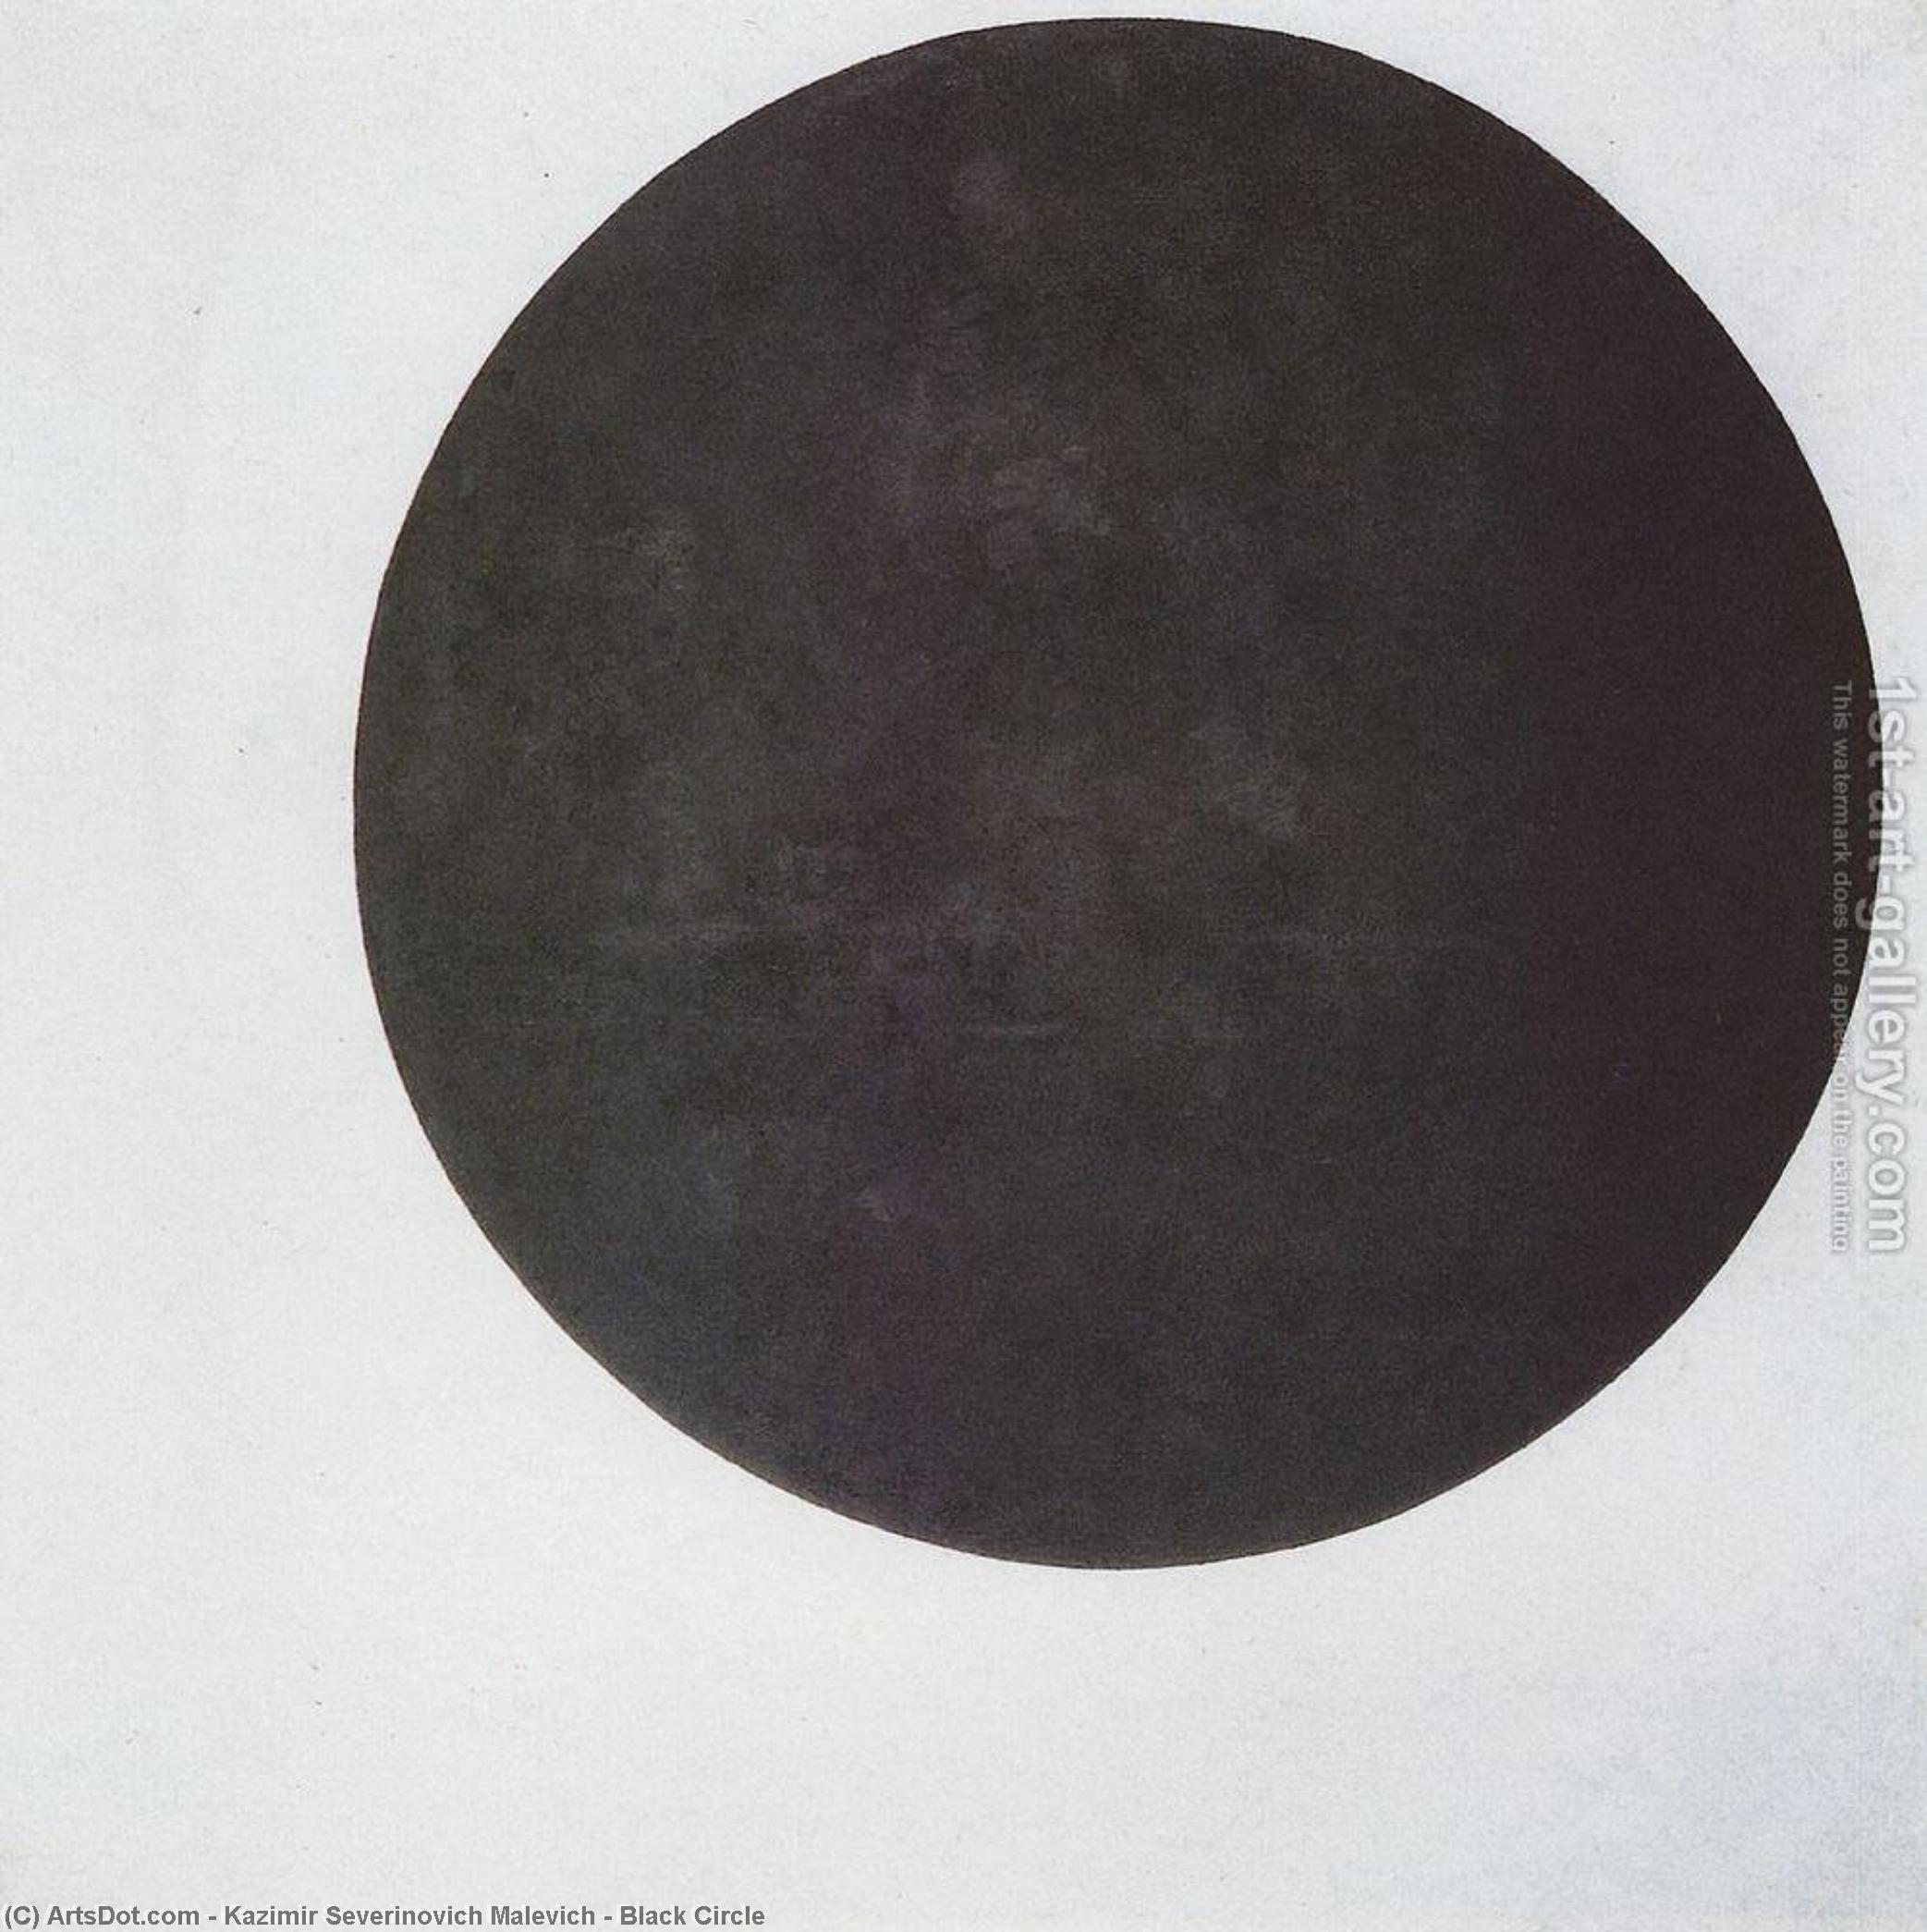  Museum Art Reproductions Black Circle, 1923 by Kazimir Severinovich Malevich (1878-1935, Ukraine) | ArtsDot.com